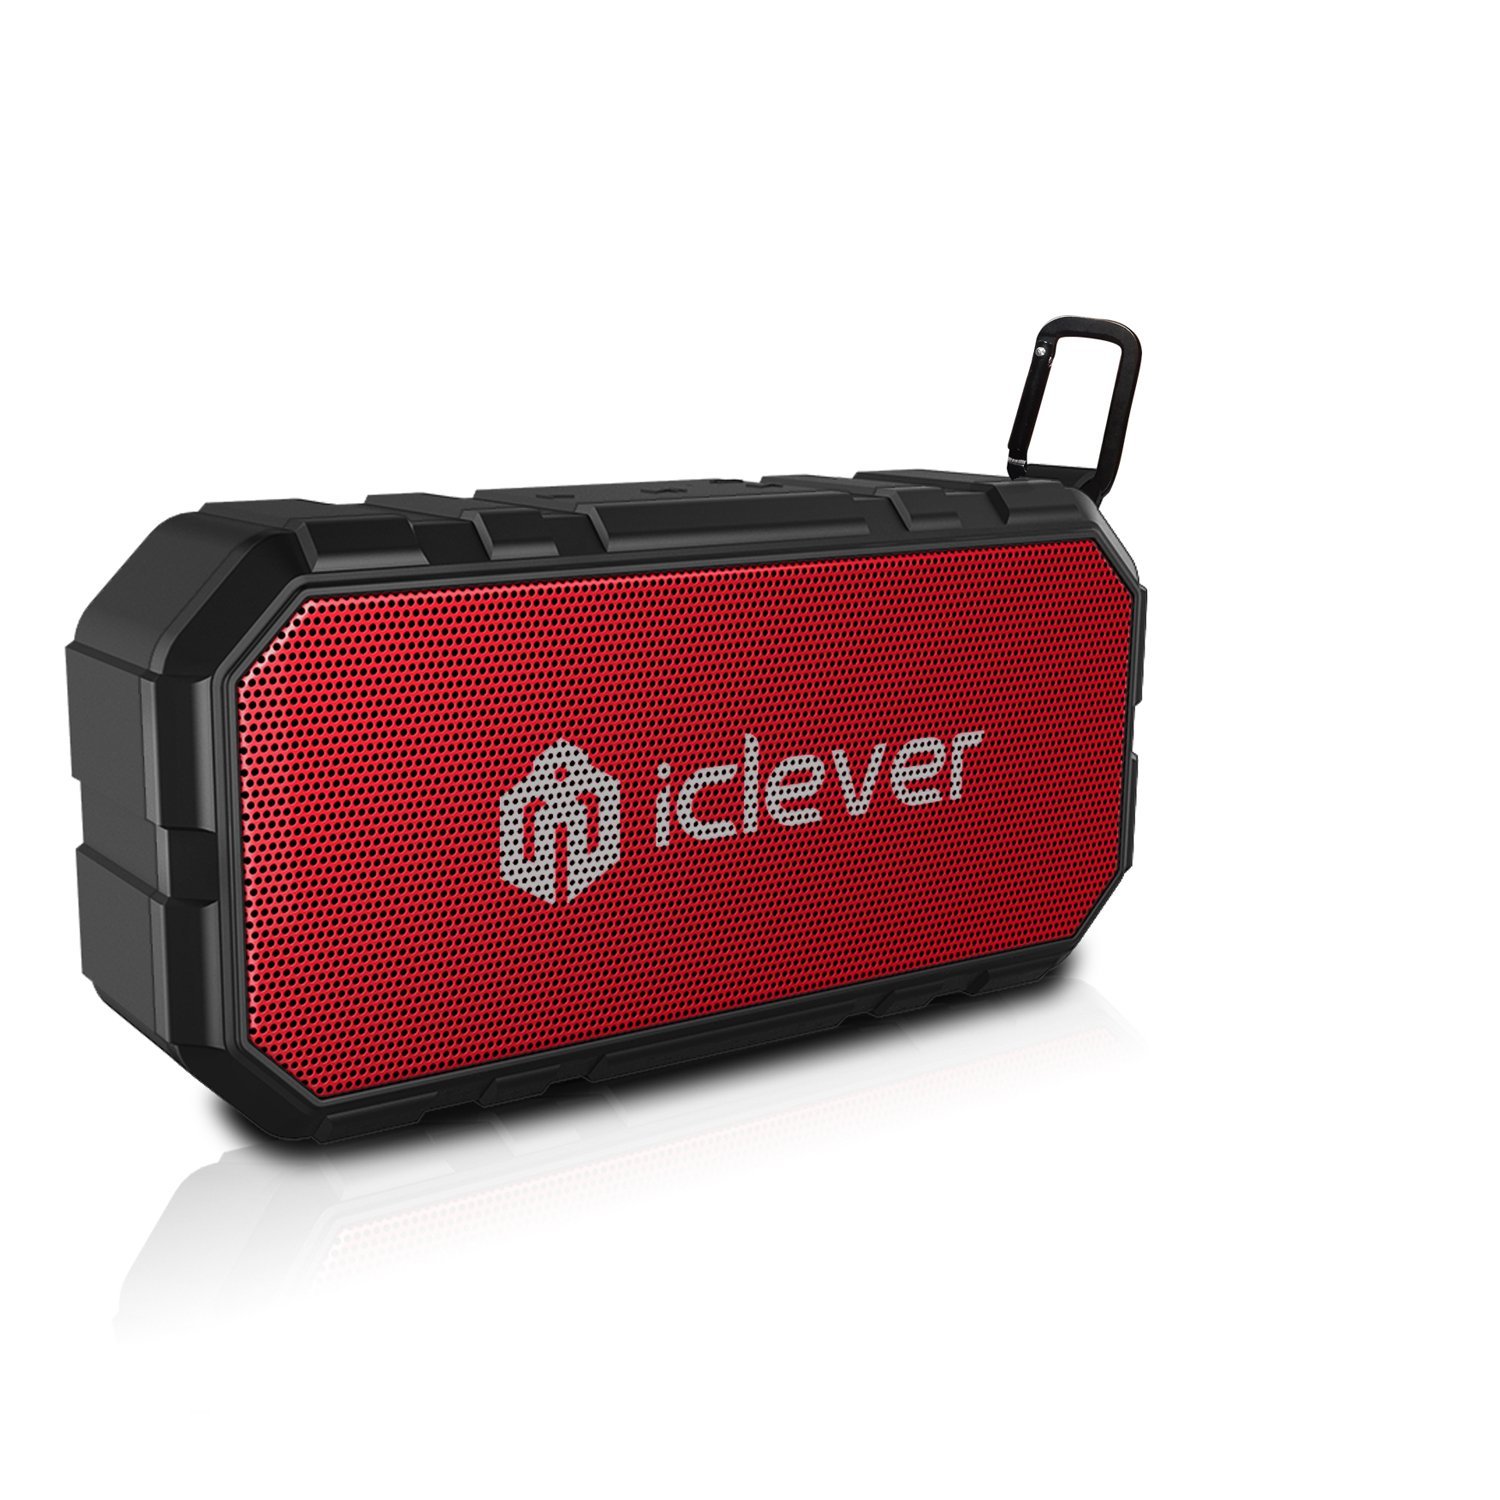 iClever BoostSound IPX5 Splashproof Portable Speaker – Just $14.74!